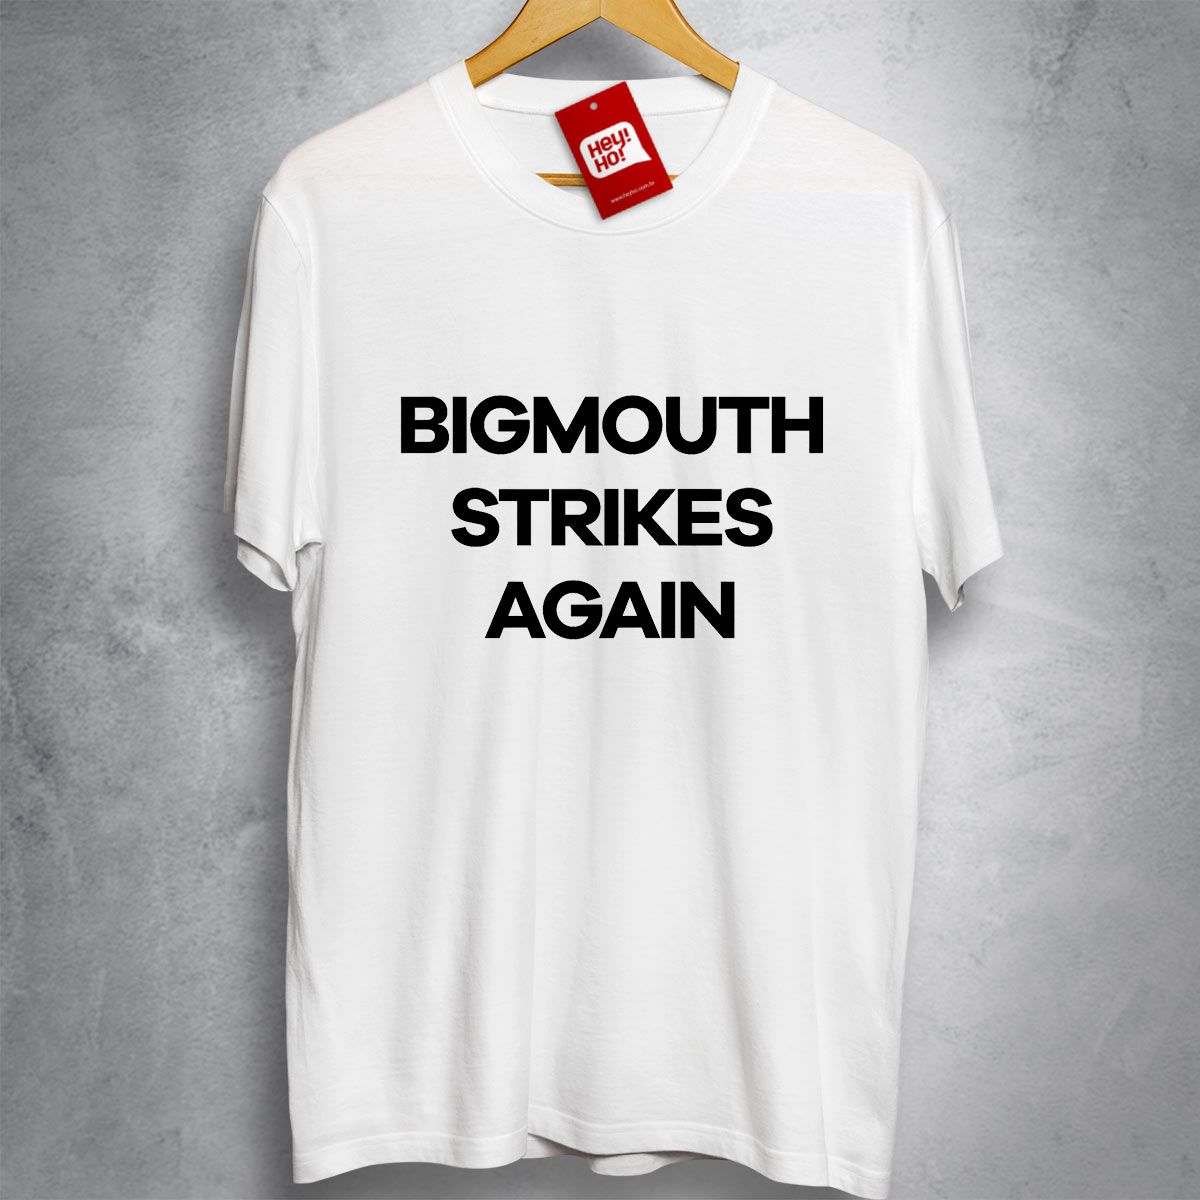 SMITHS - Bigmouth strikes again